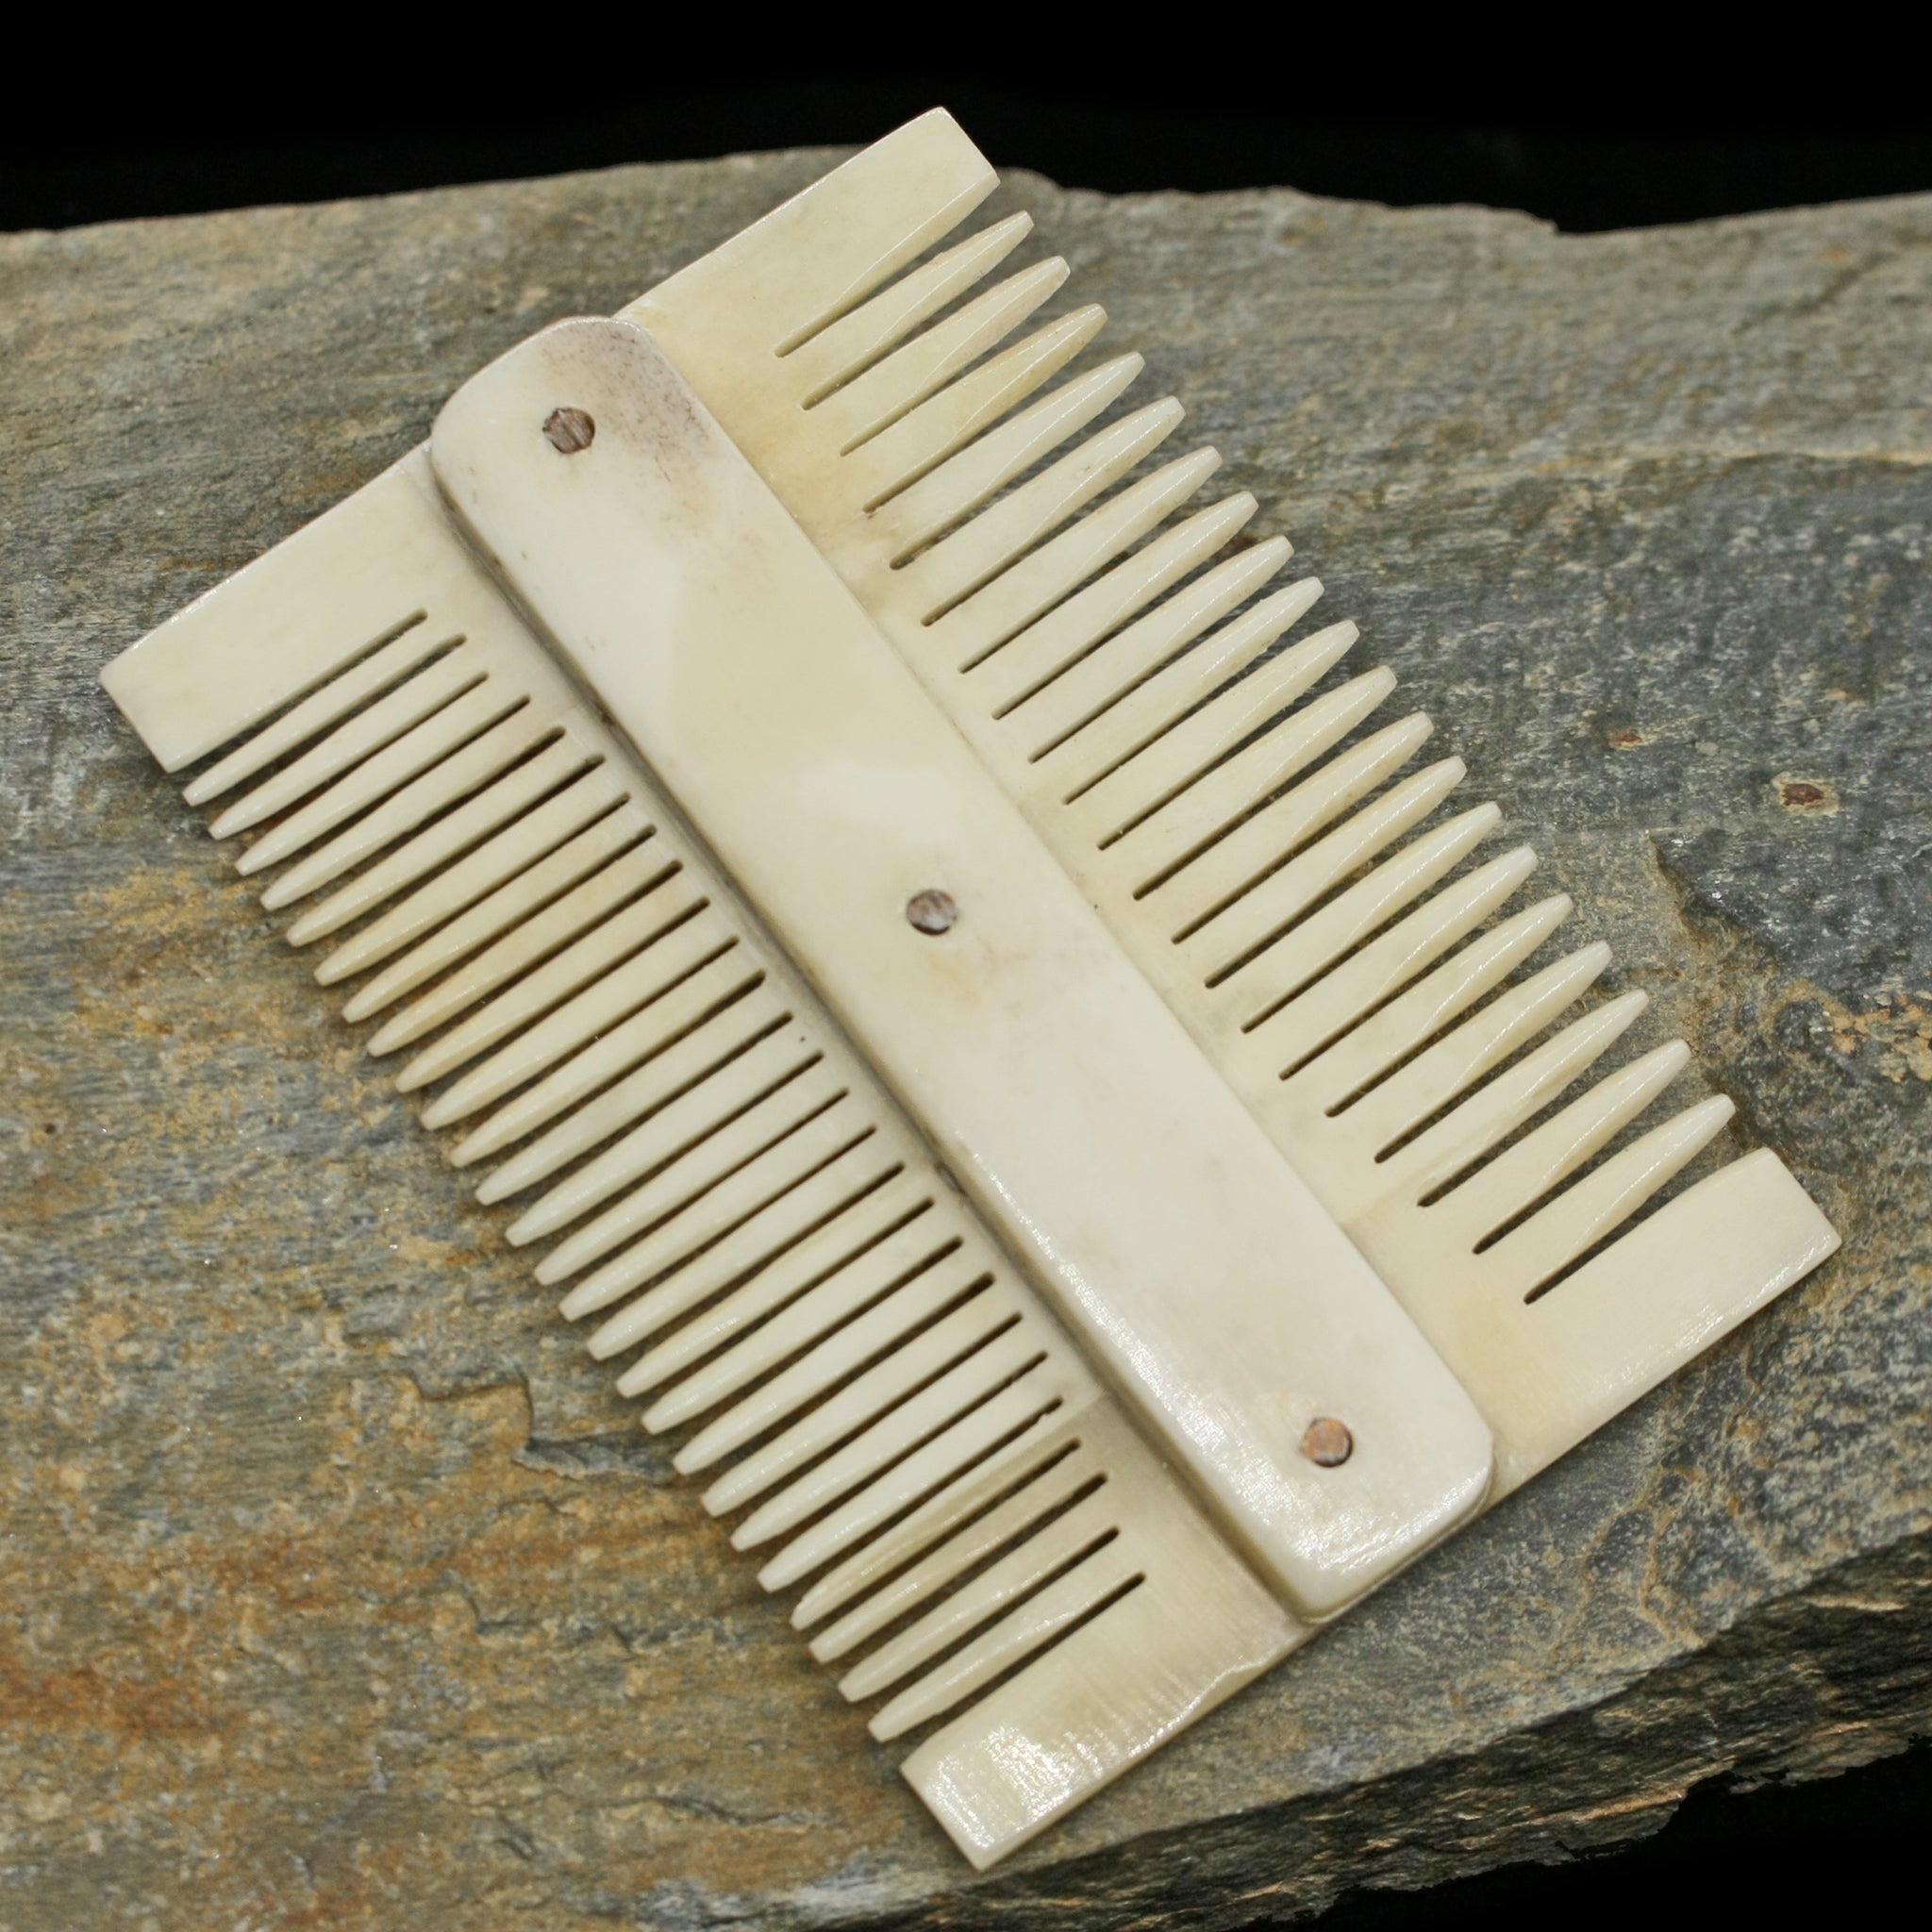 Double Sided Bone Viking Comb on Rock